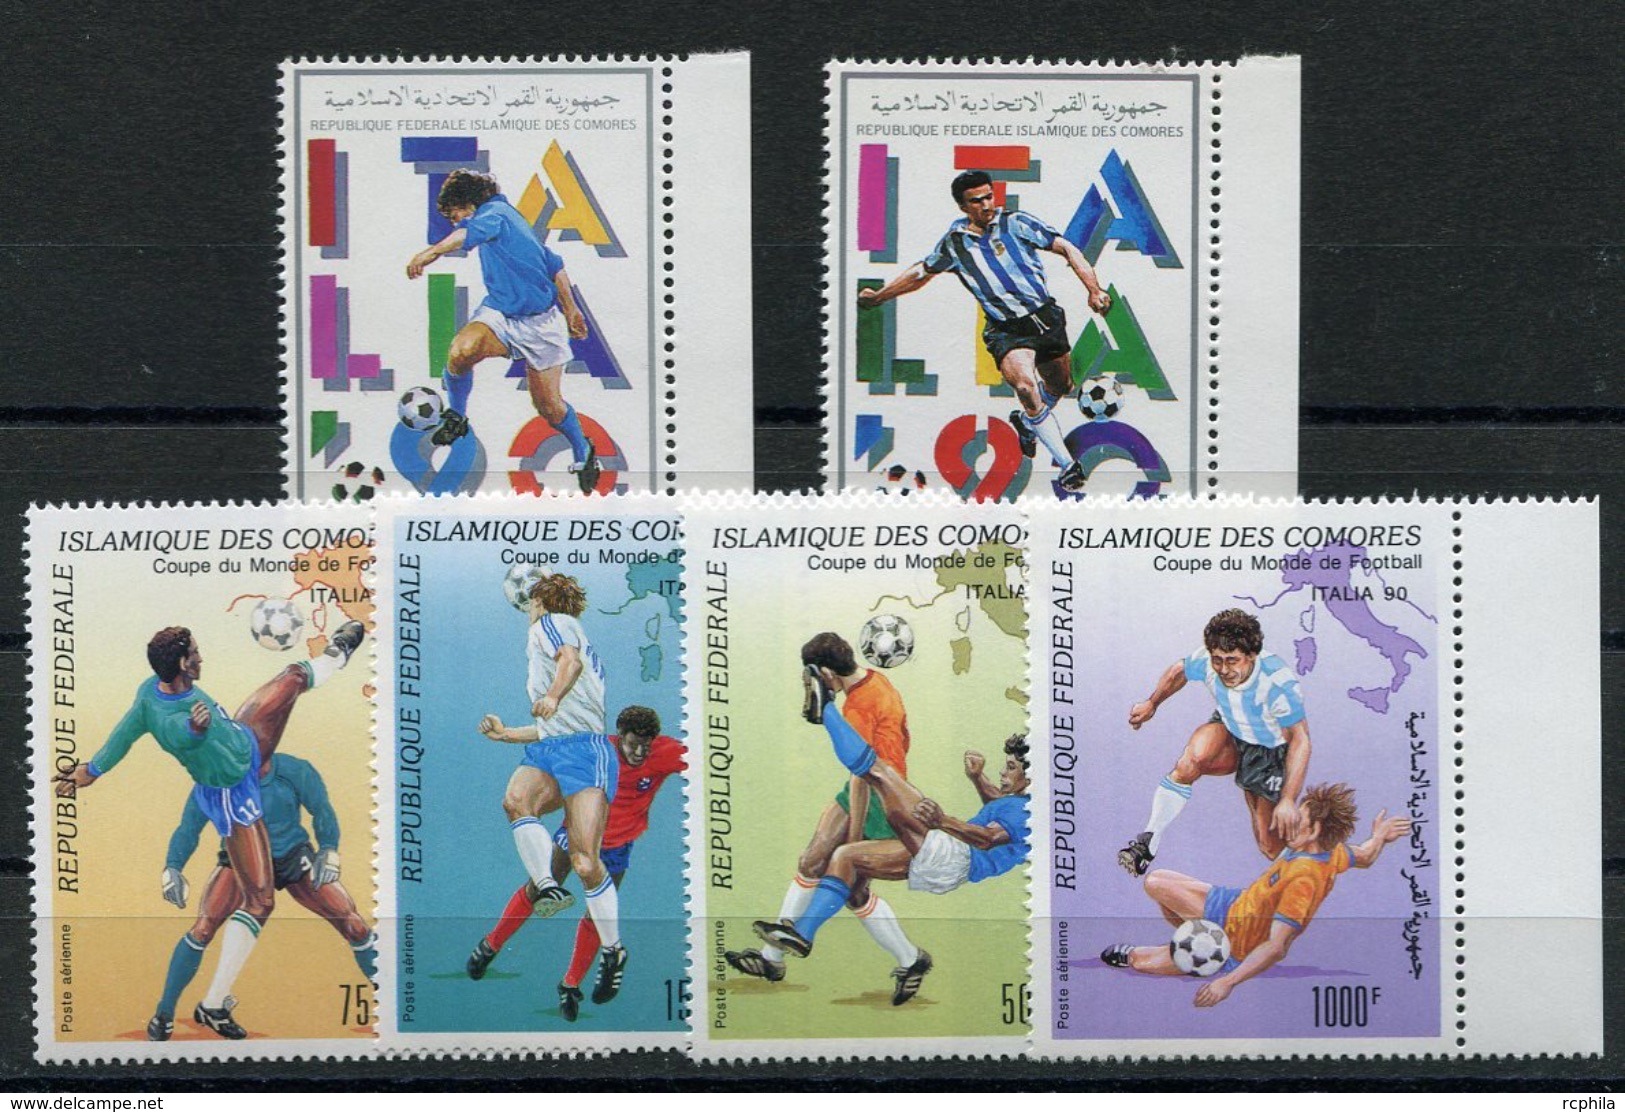 RC 6875 COMORES PA 287 / 288 + PA 290 / 293 - ITALIA 90 COUPE DU MONDE DE FOOTBALL SERIES COMPLETES NEUF ** TB - Comores (1975-...)